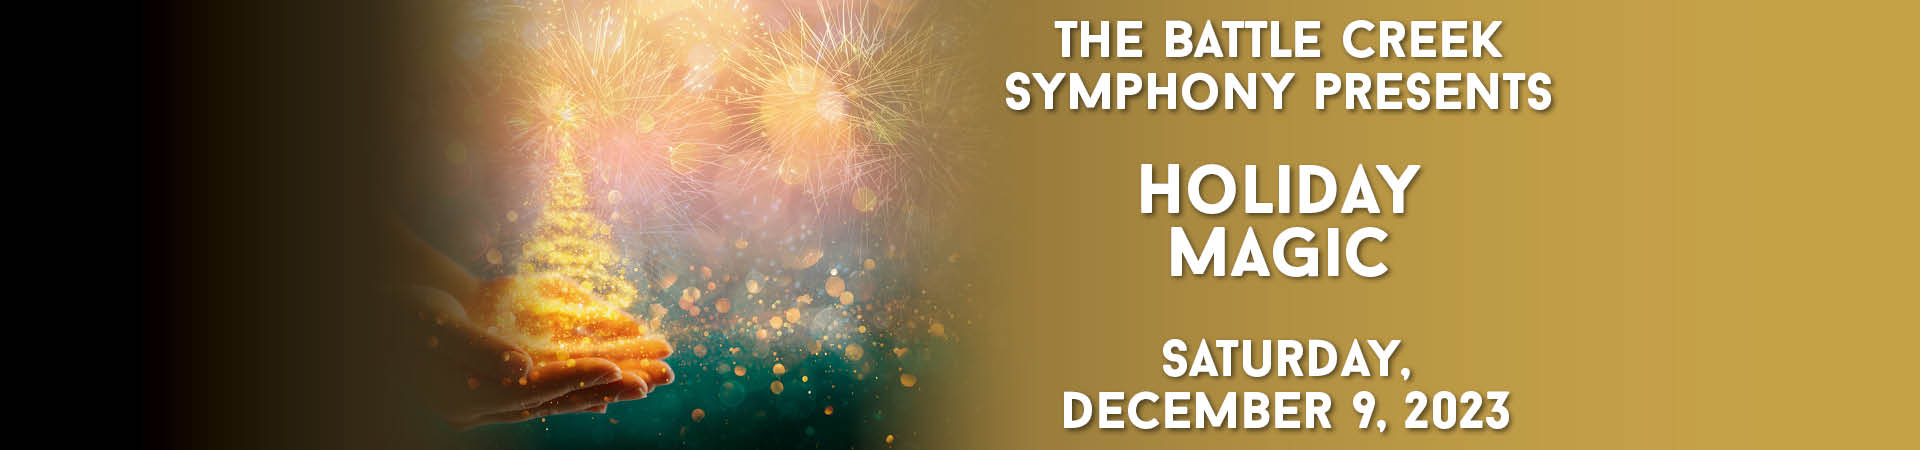 The Battle Creek Symphony presents Holiday Magic December 9, 2023